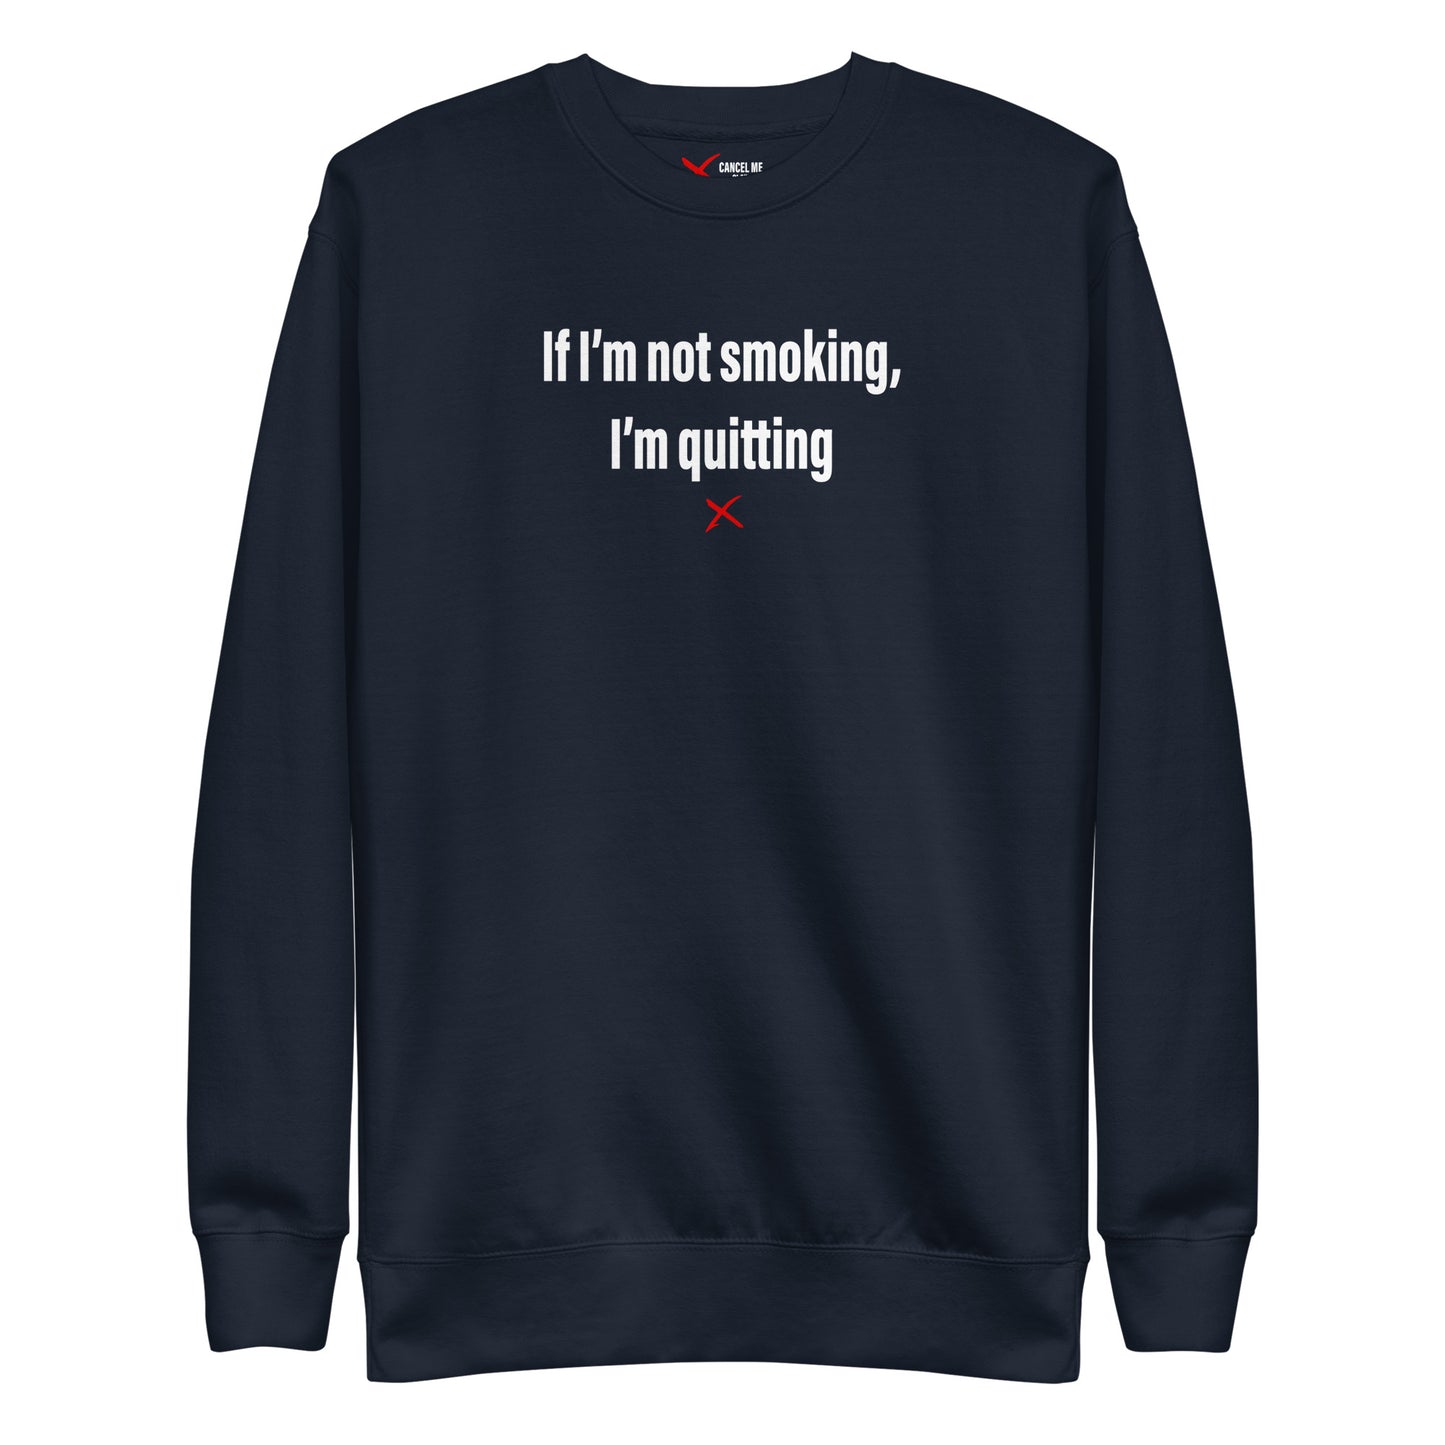 If I'm not smoking, I'm quitting - Sweatshirt